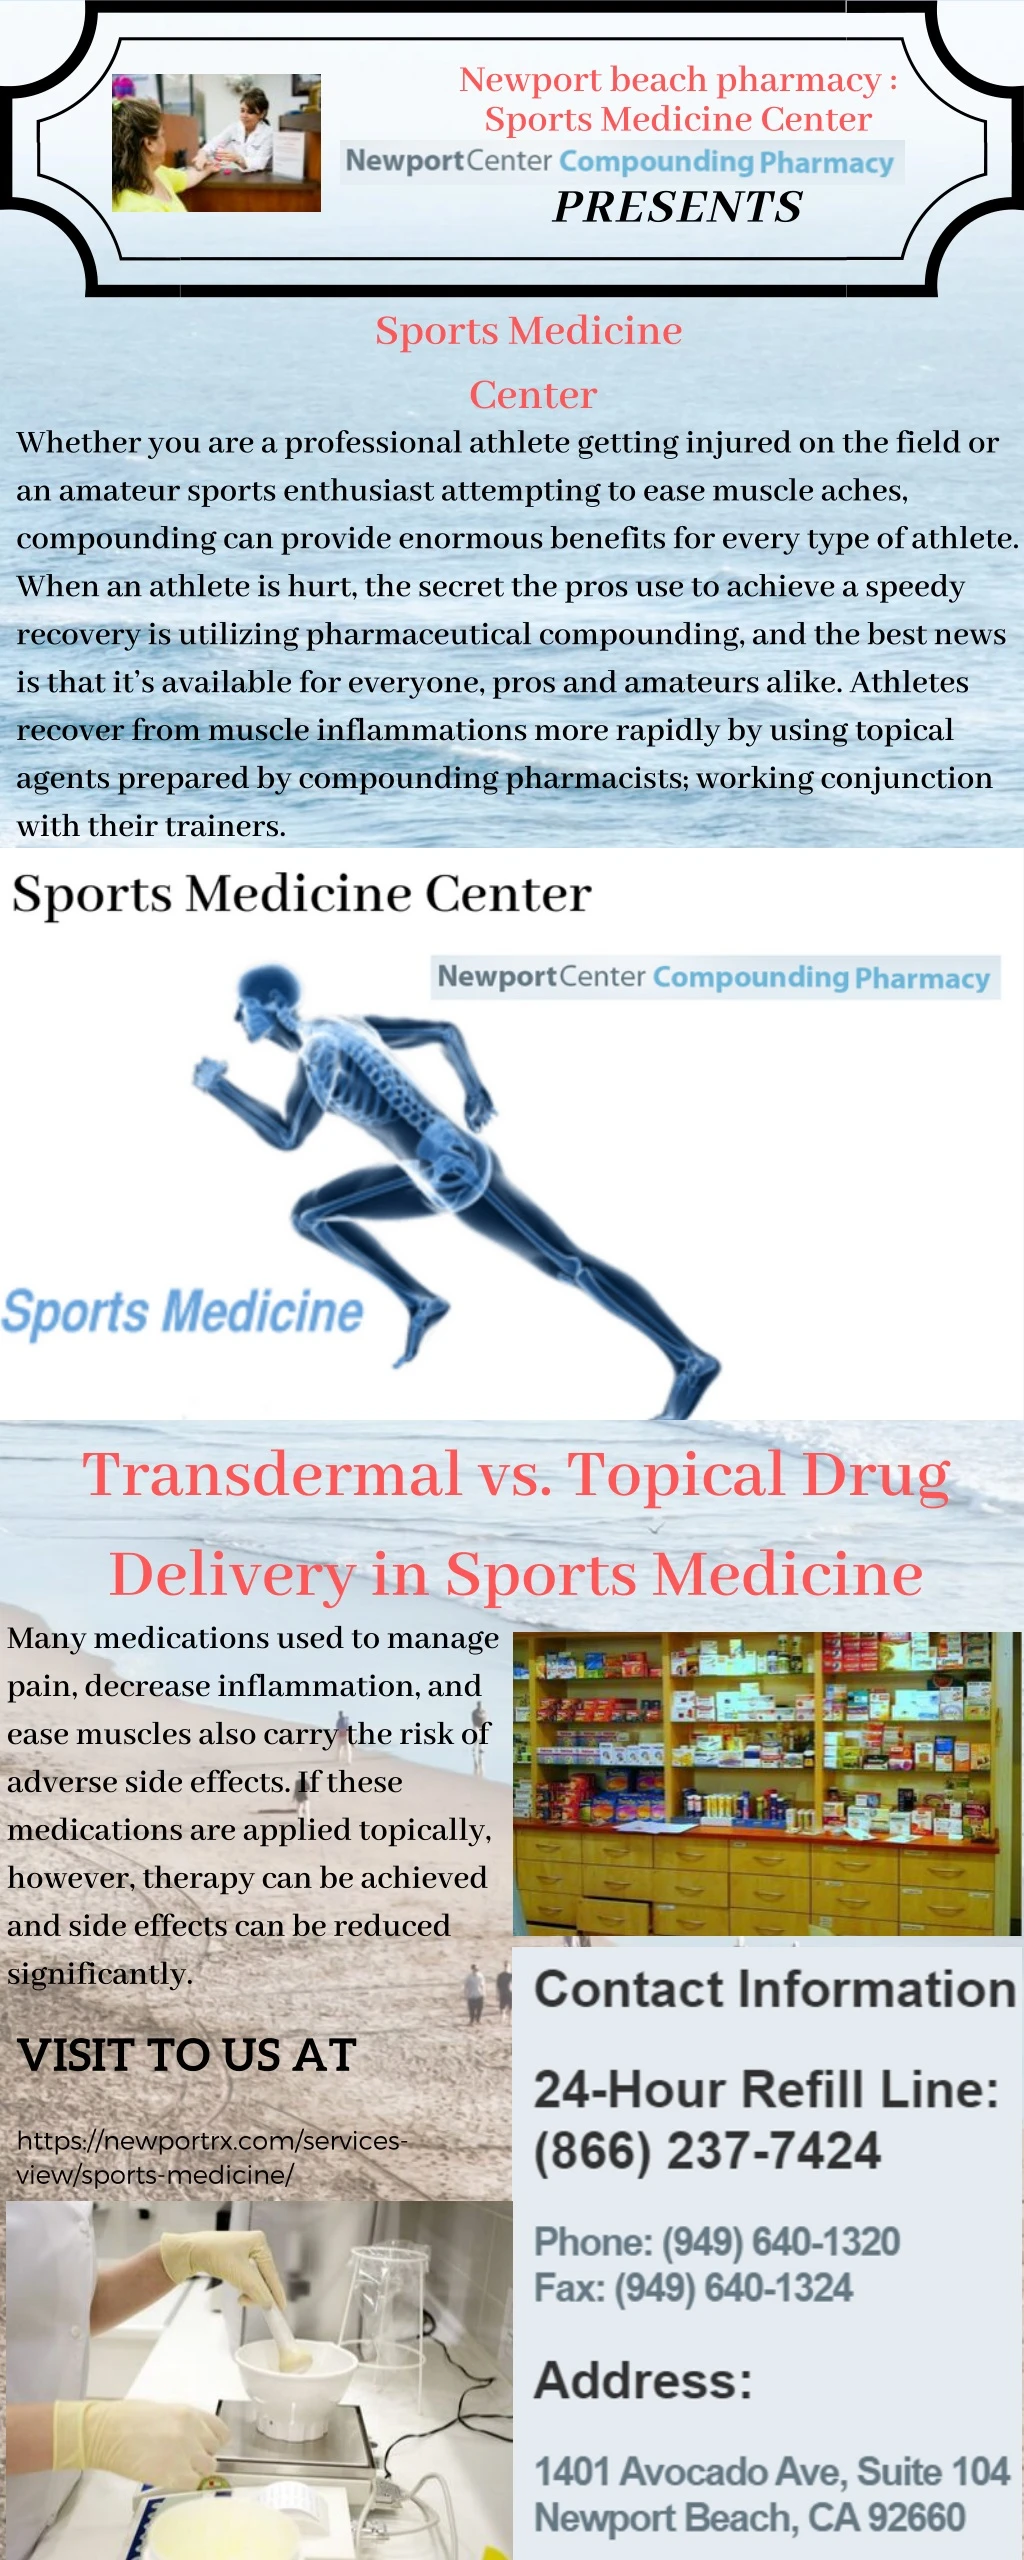 newport beach pharmacy sports medicine center